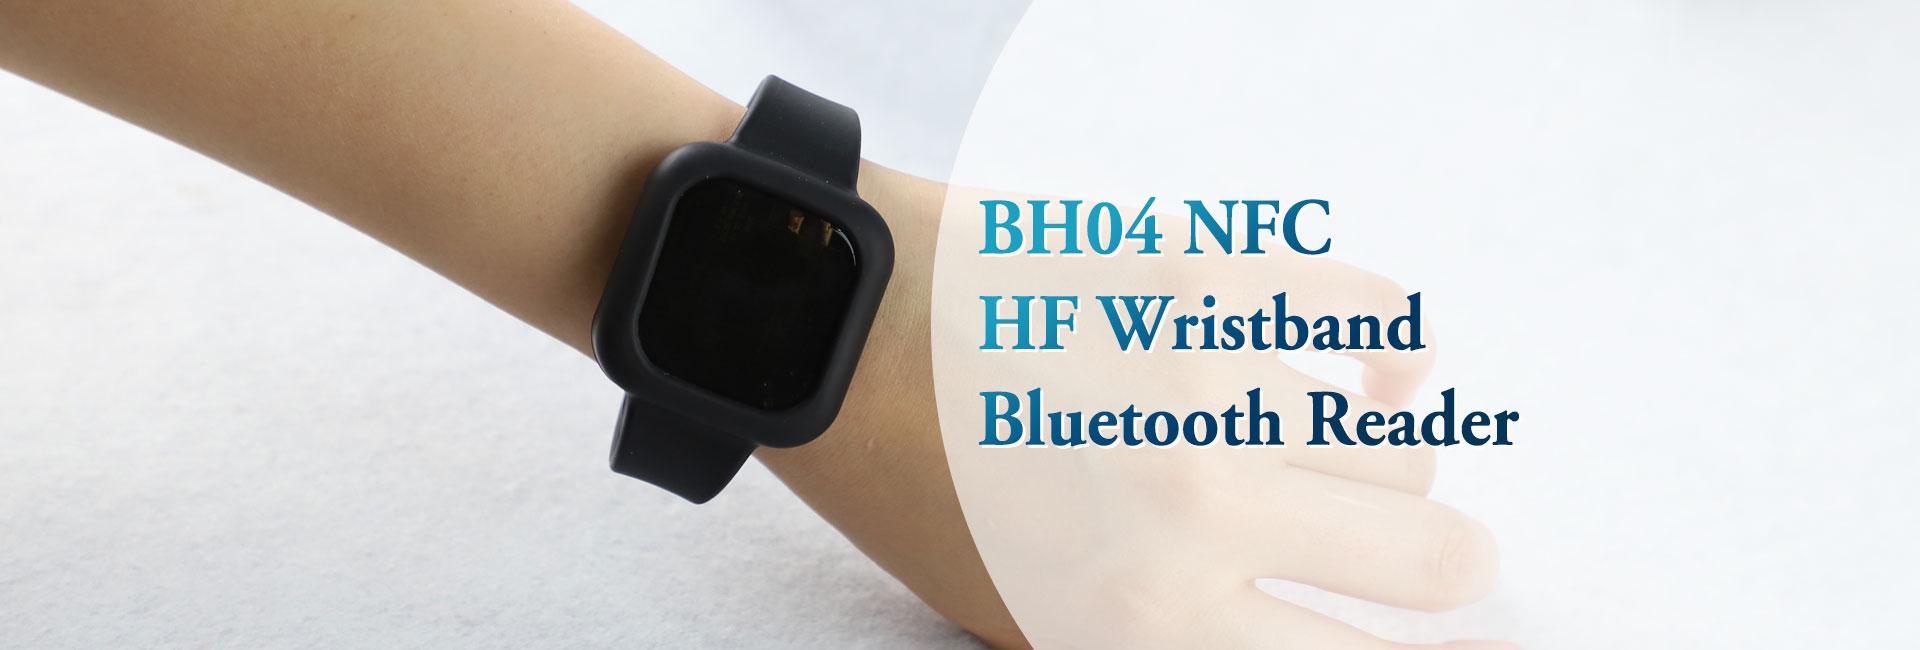 BH04 NFC高频腕带蓝牙Reader